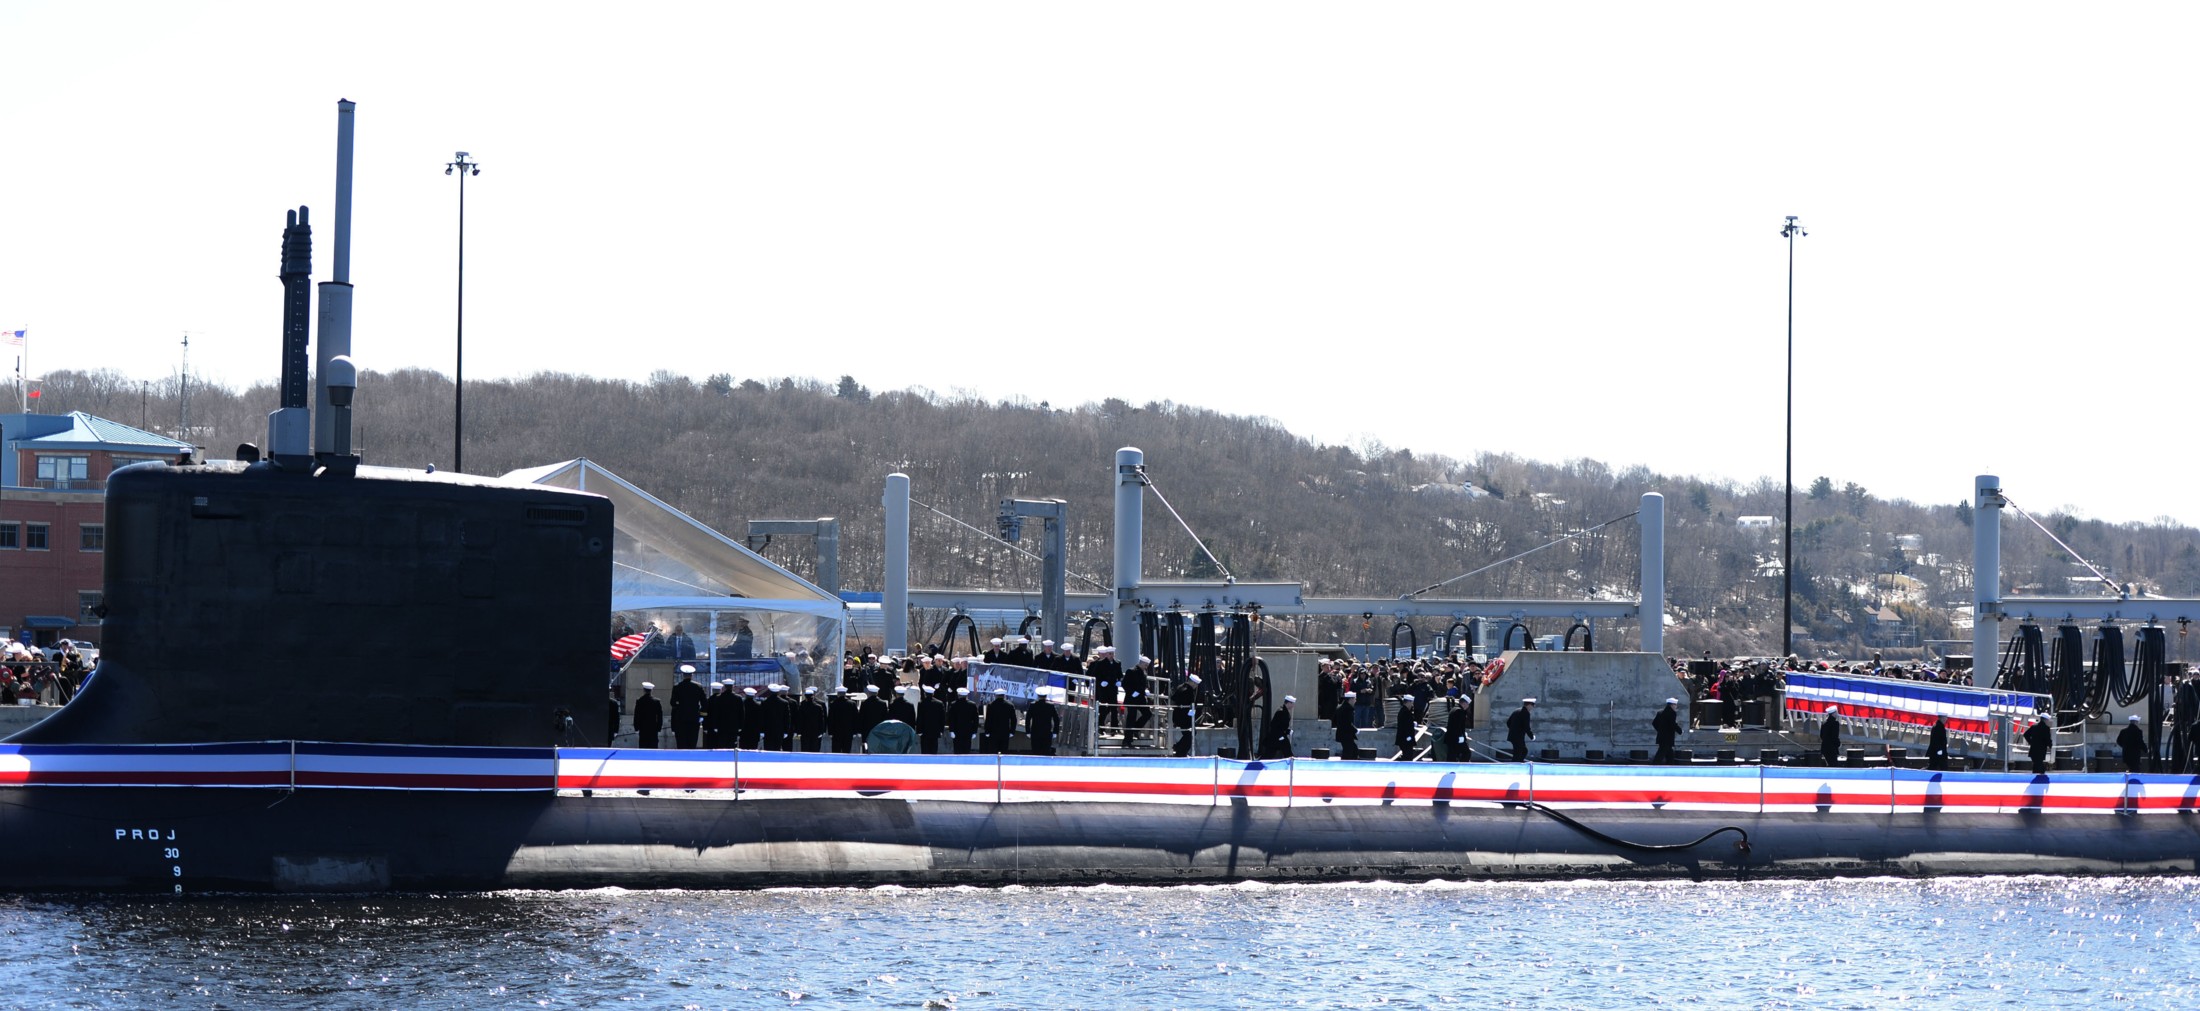 ssn-788 uss colorado virginia class attack submarine us navy 09 commissioning ceremony groton